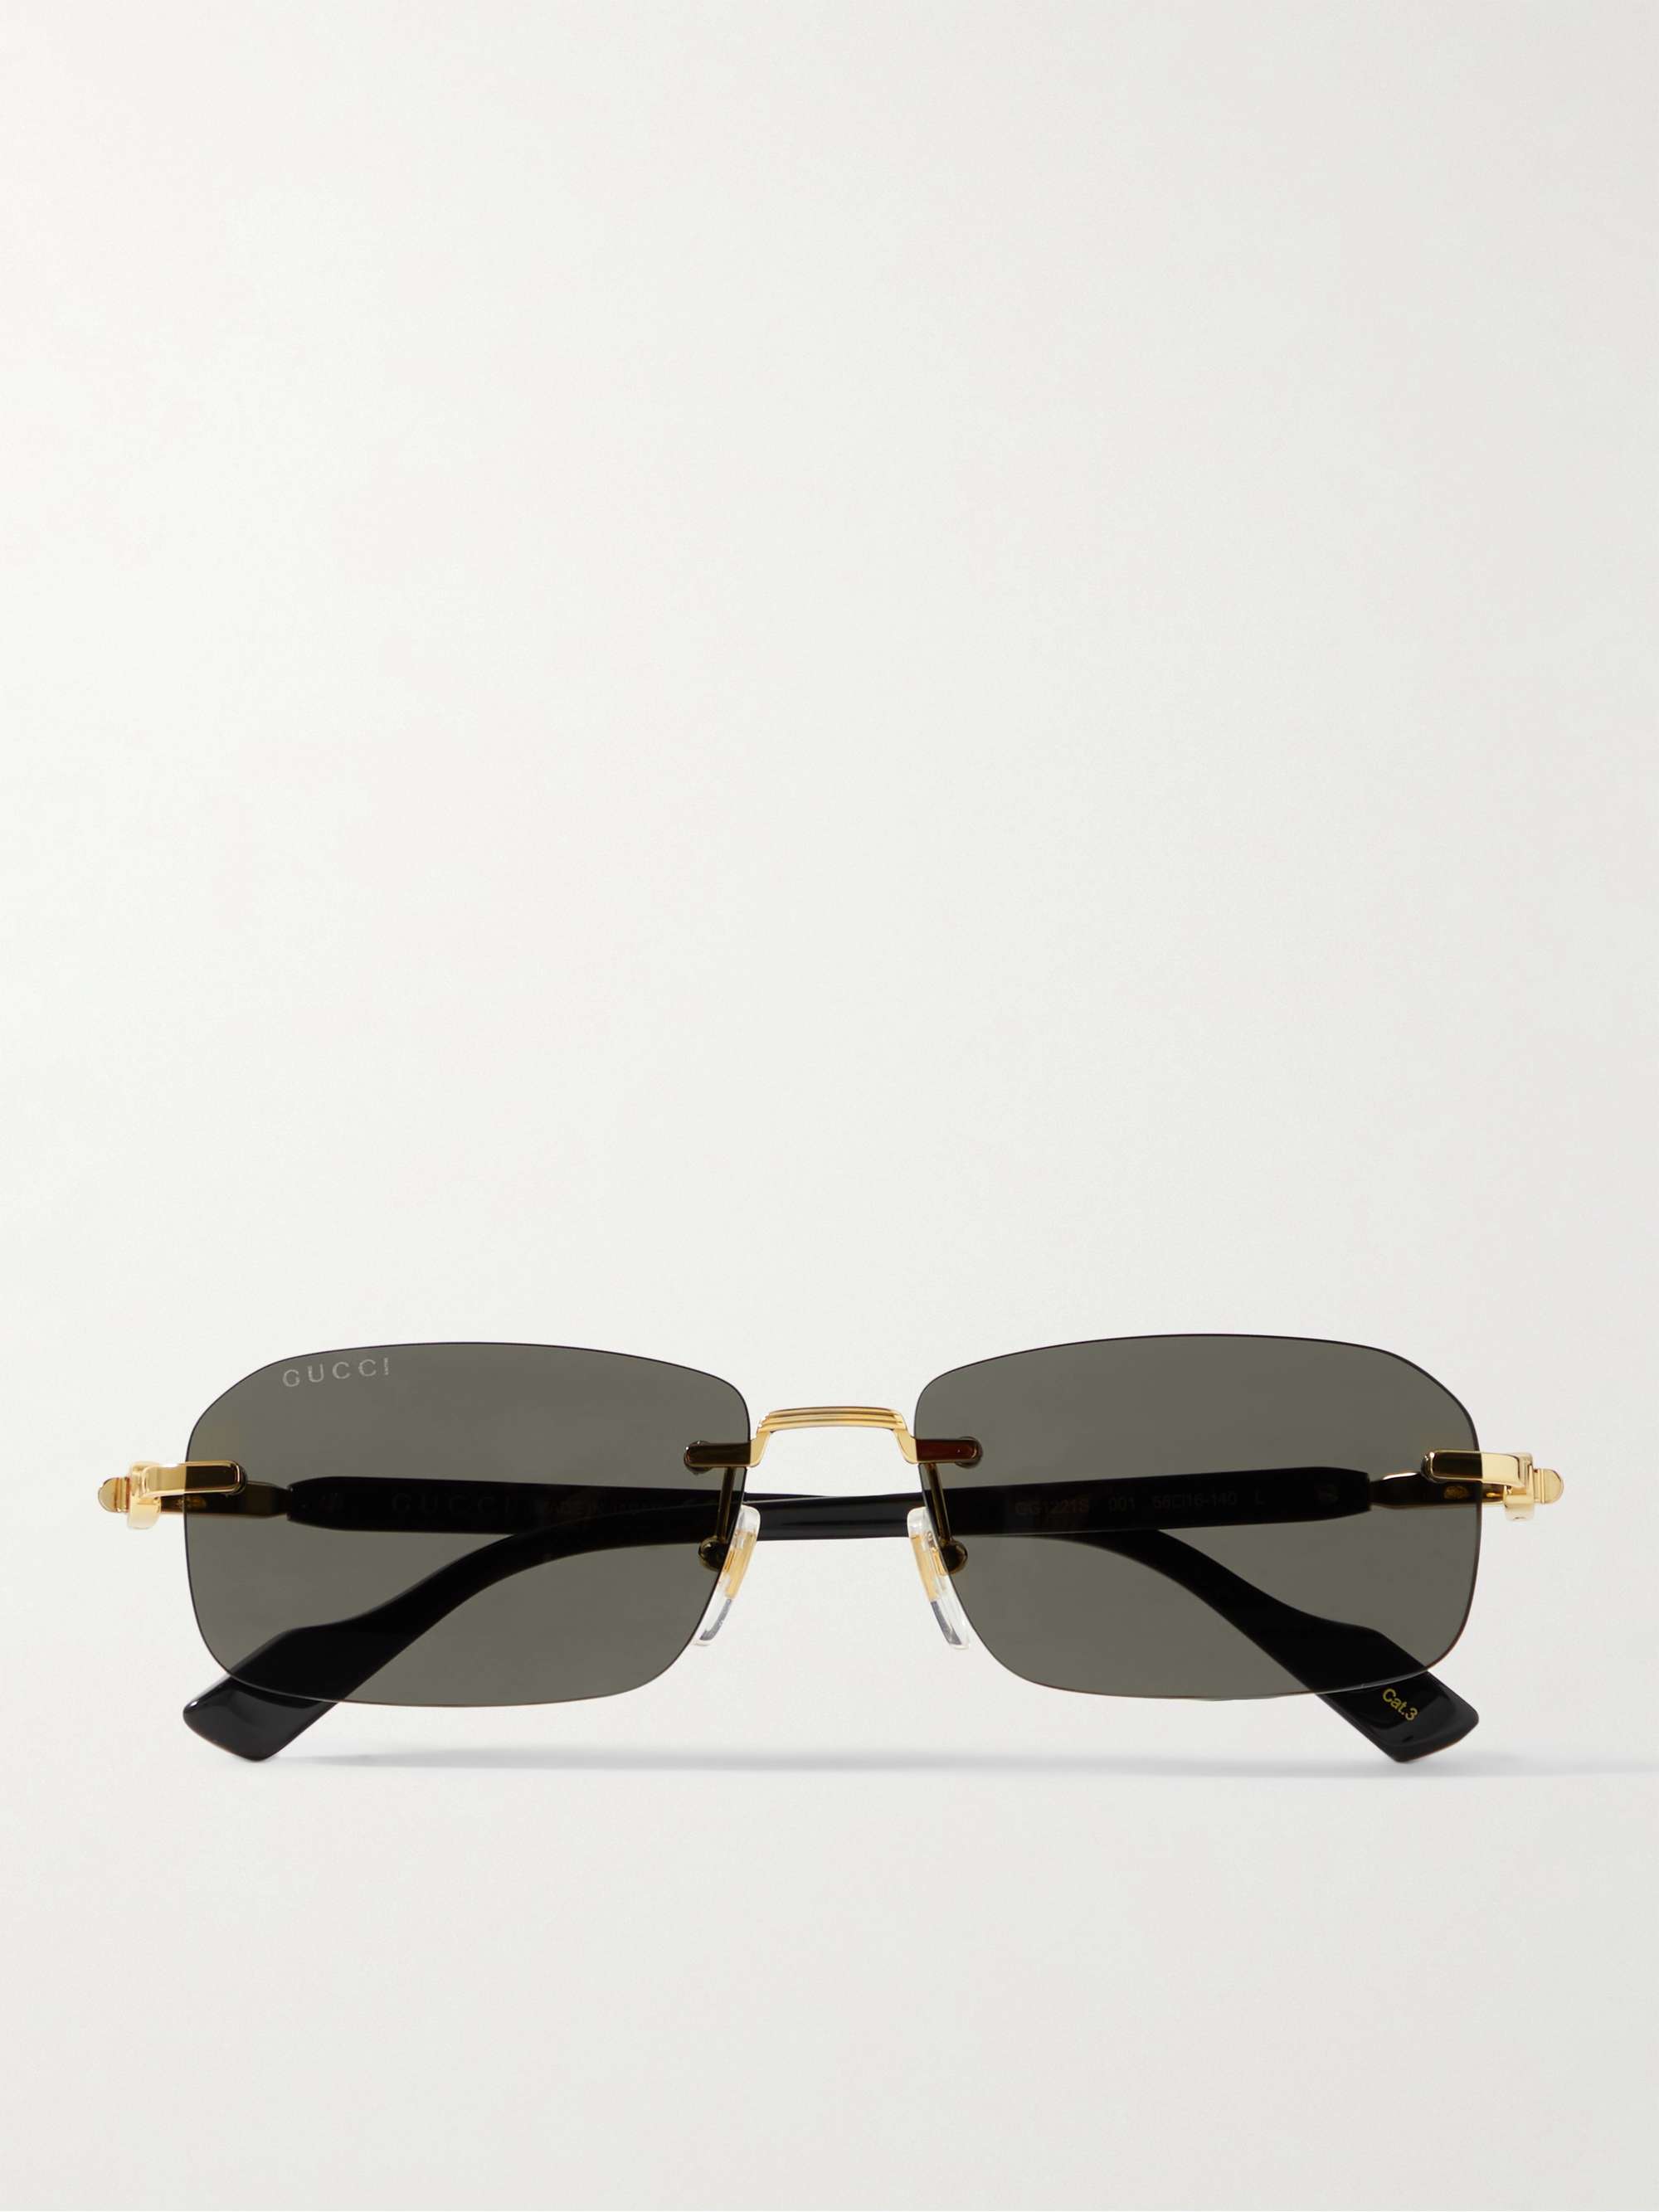 GUCCI EYEWEAR Rimless Rectangular-Frame Gold-Tone and Tortoiseshell Acetate Sunglasses